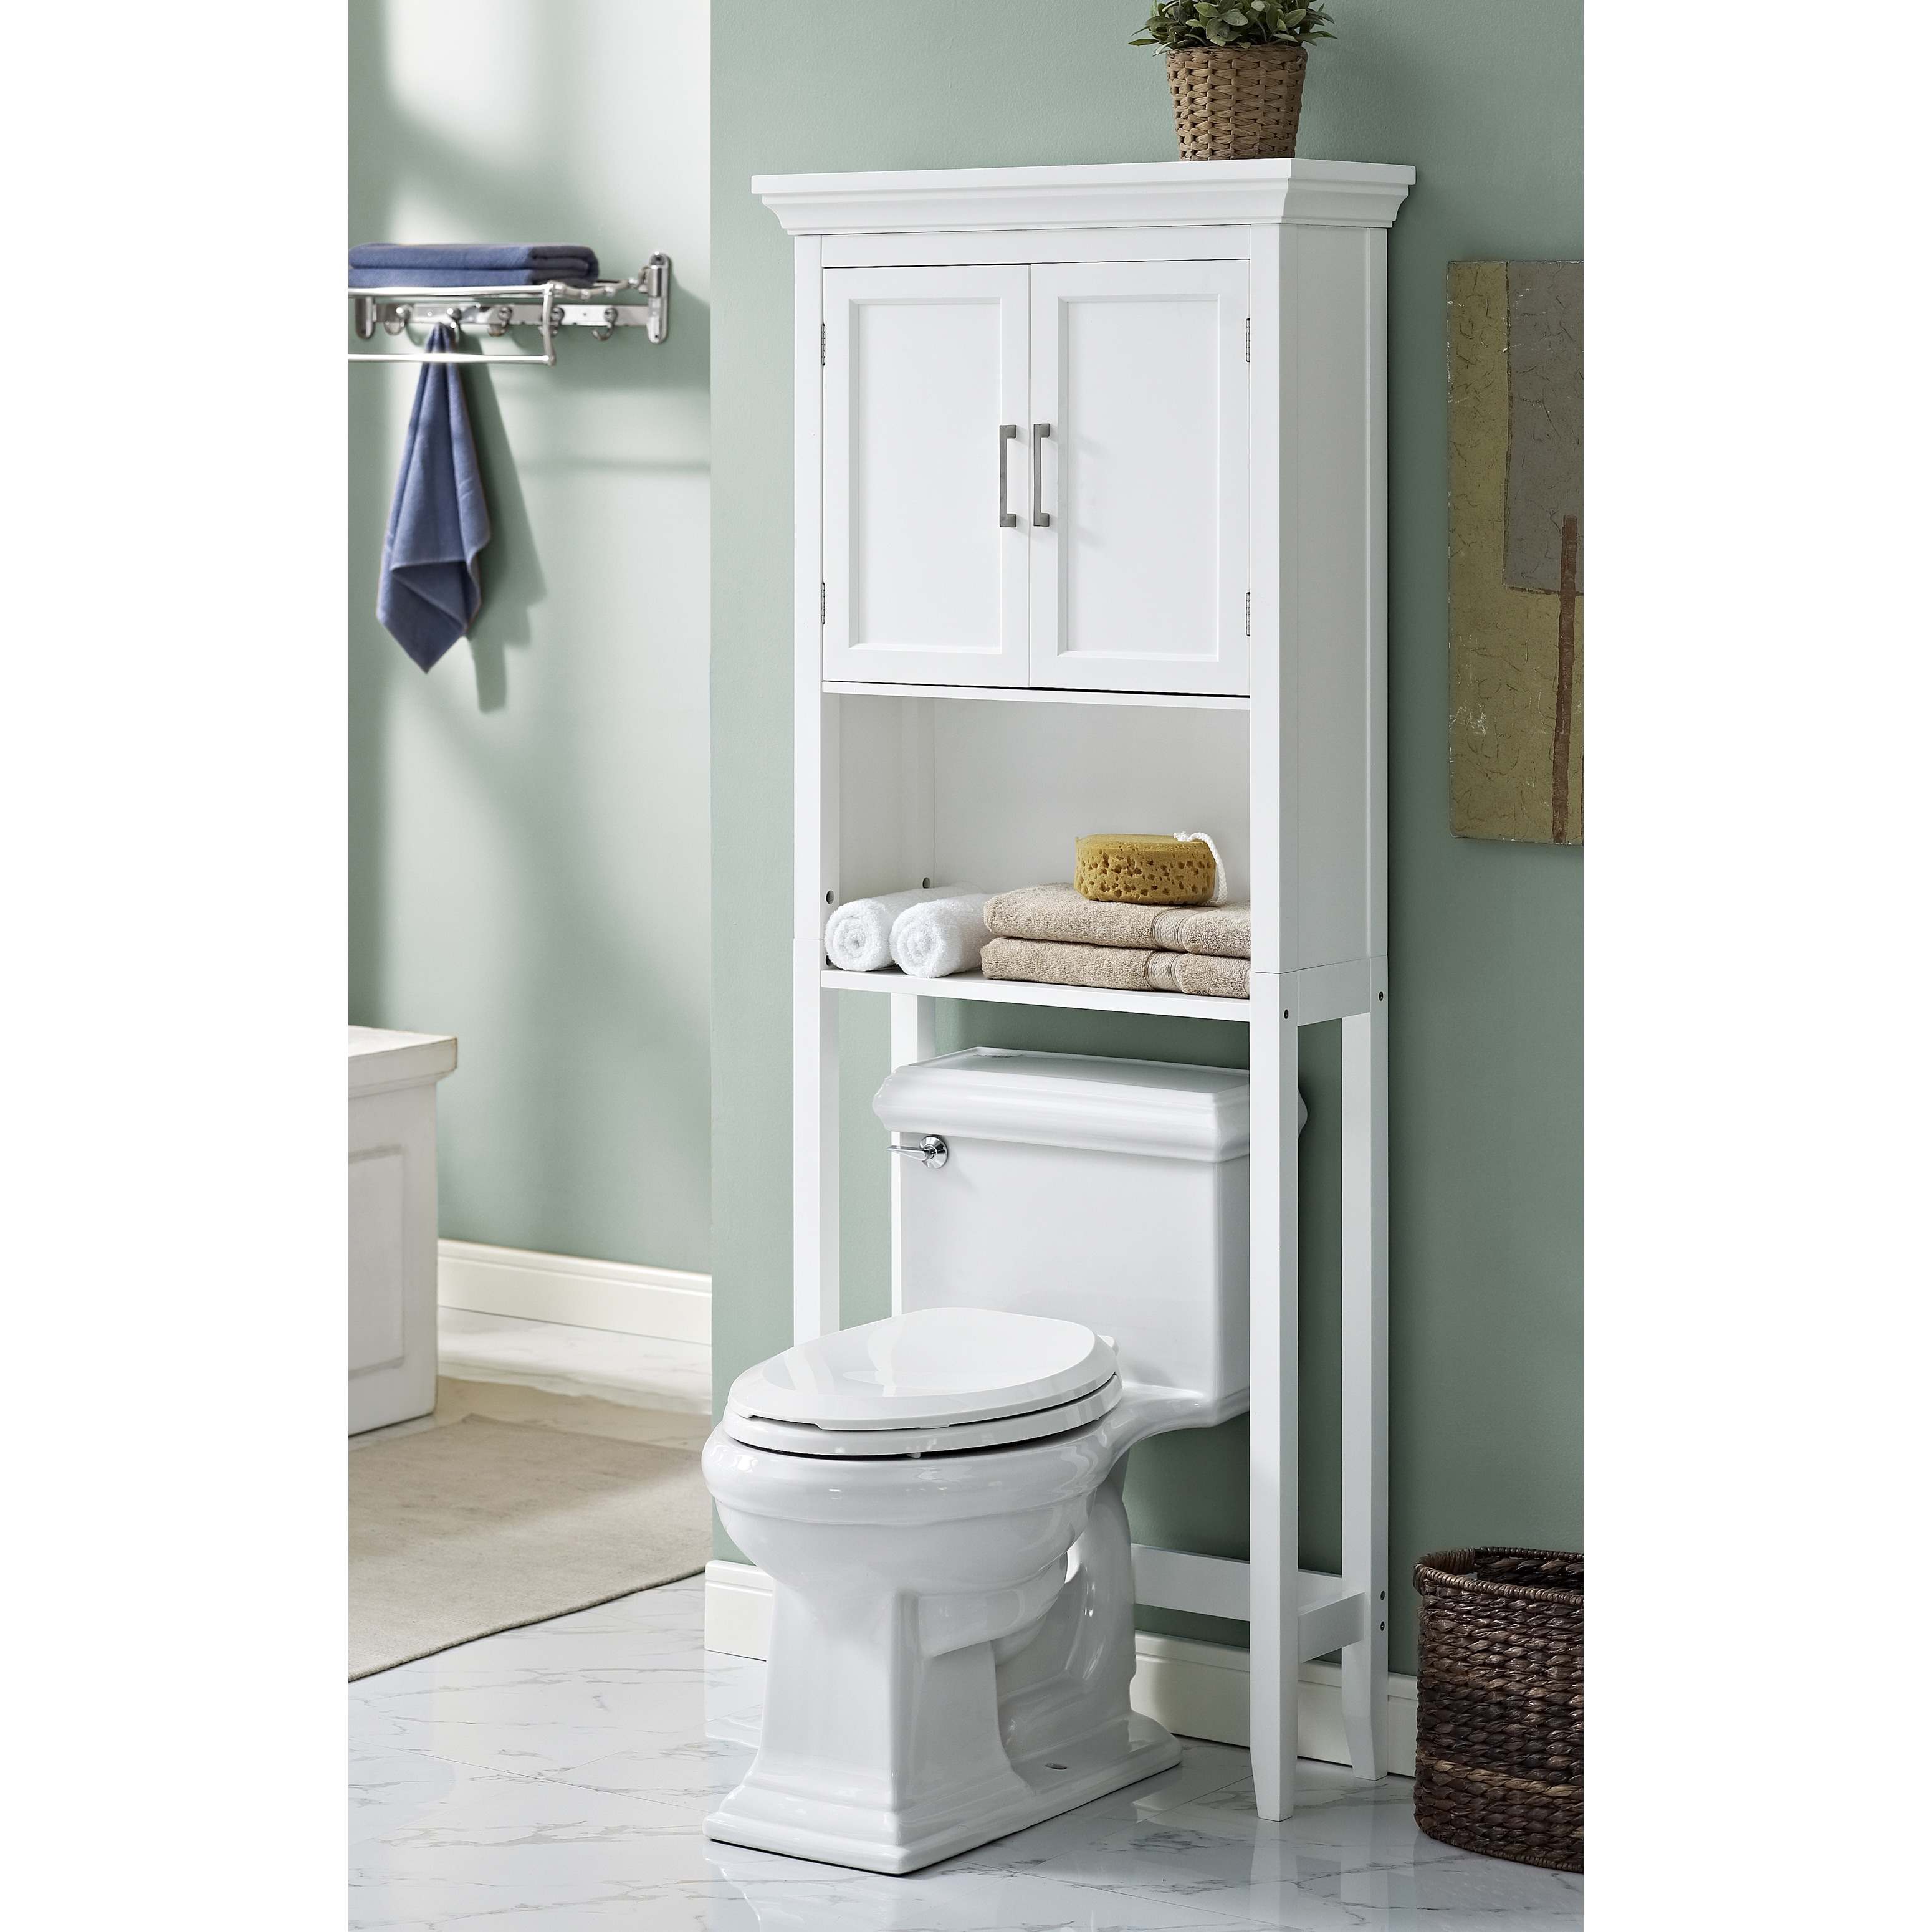 WYNDENHALL Hayes White Bathroom Space Saver Cabinet Free